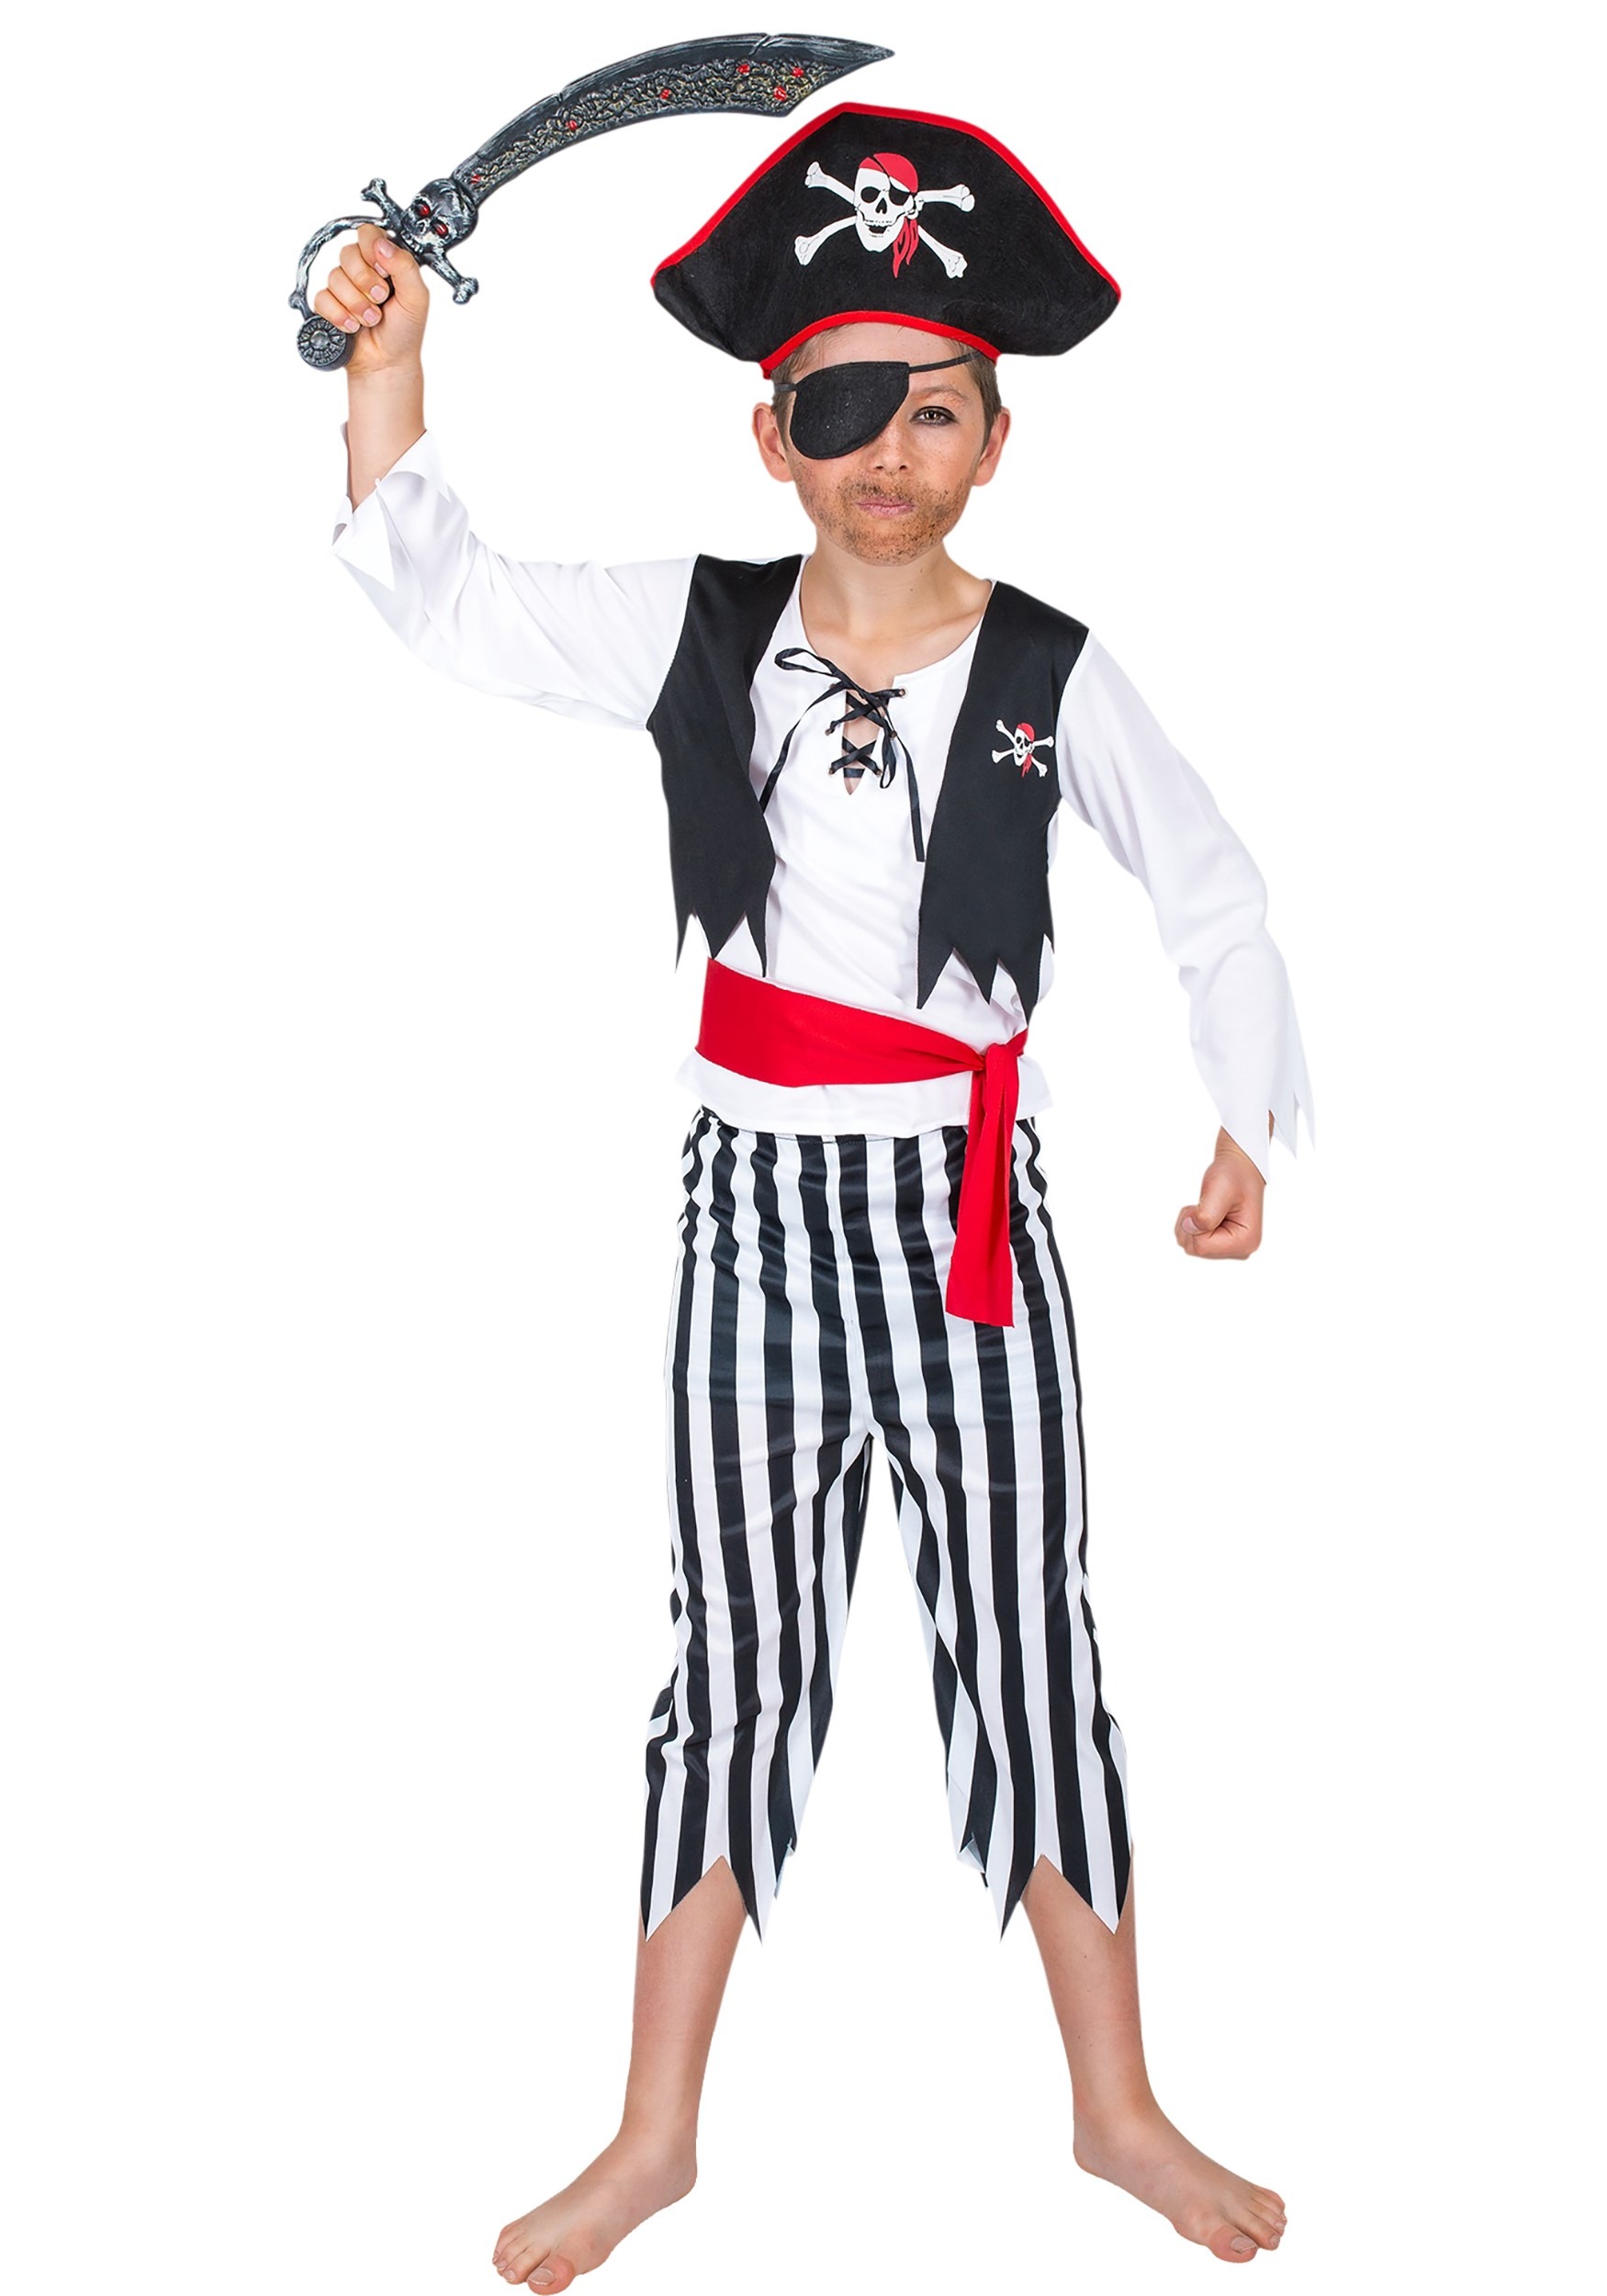 Костюм пирата для мальчика своими руками на скорую руку фото